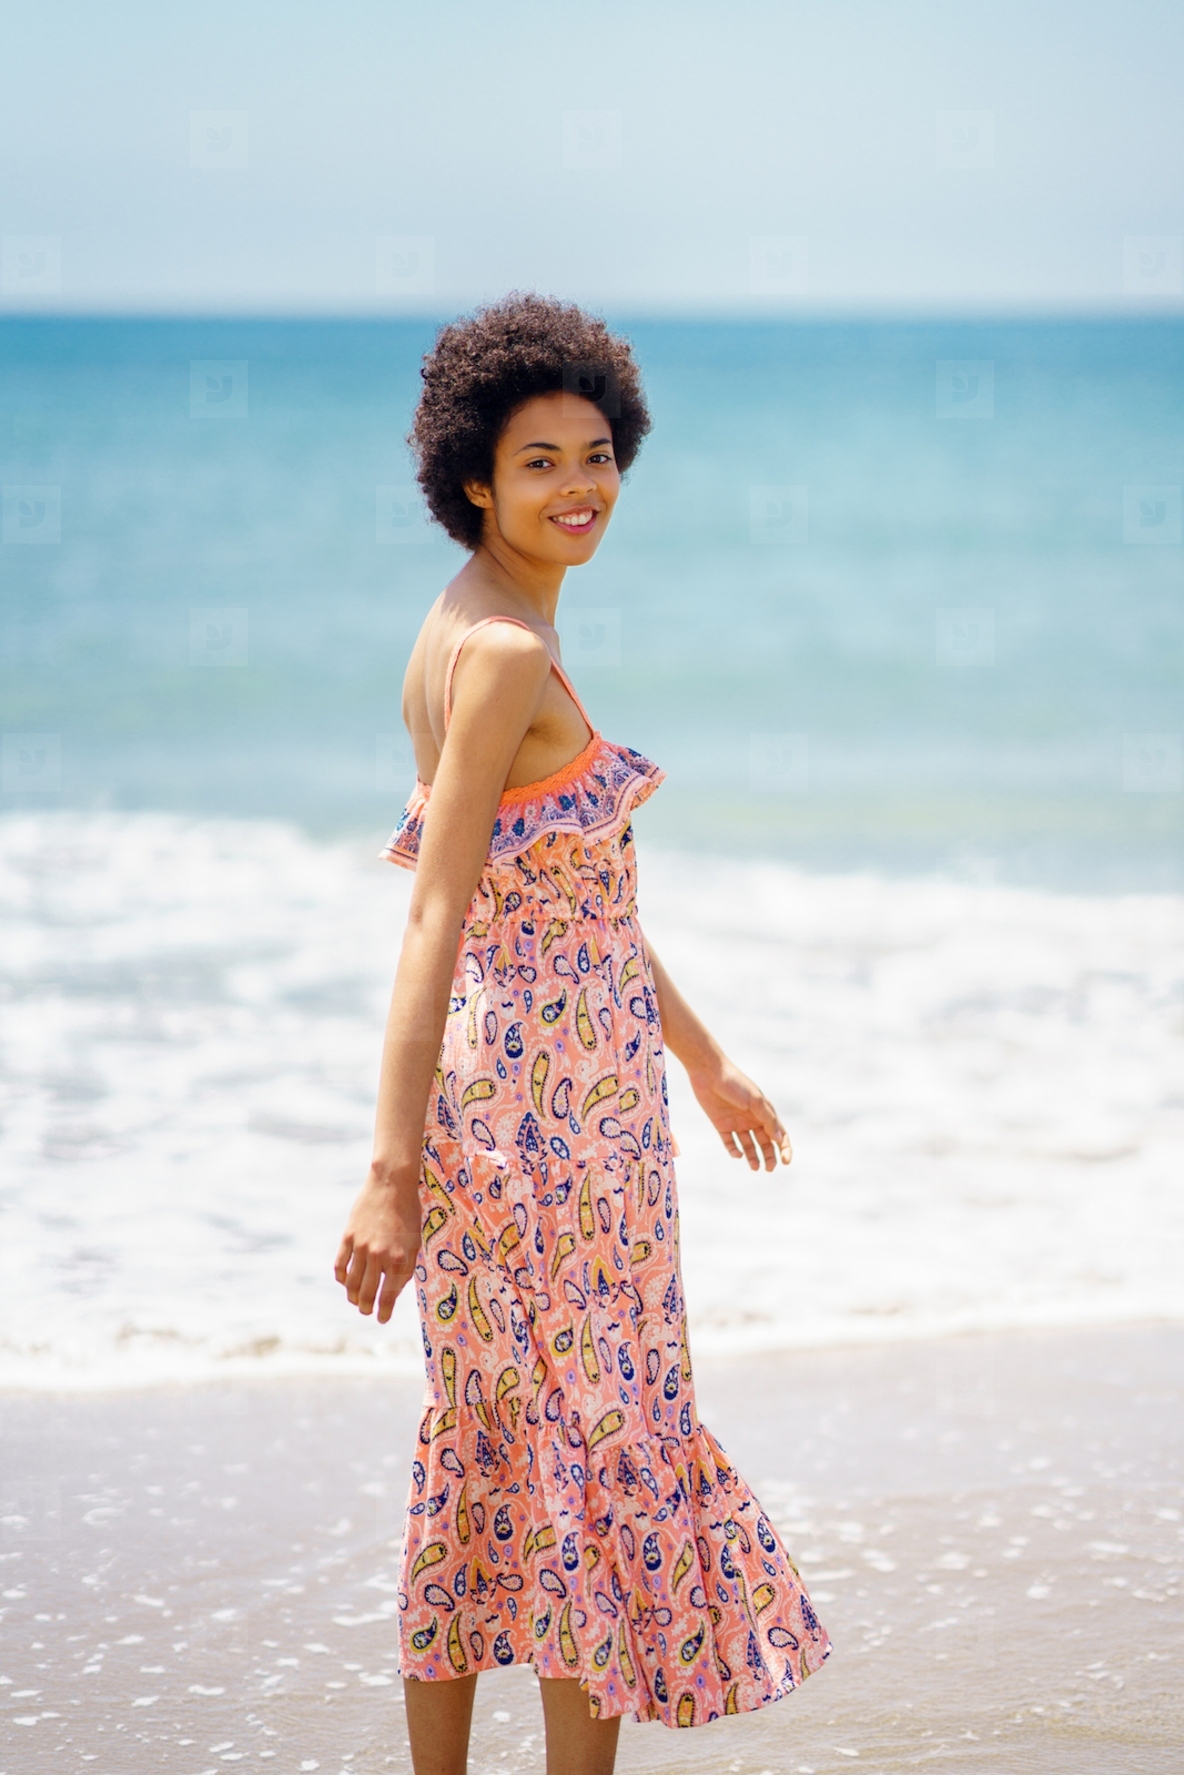 Cheerful ethnic woman enjoying bright summer day at seaside